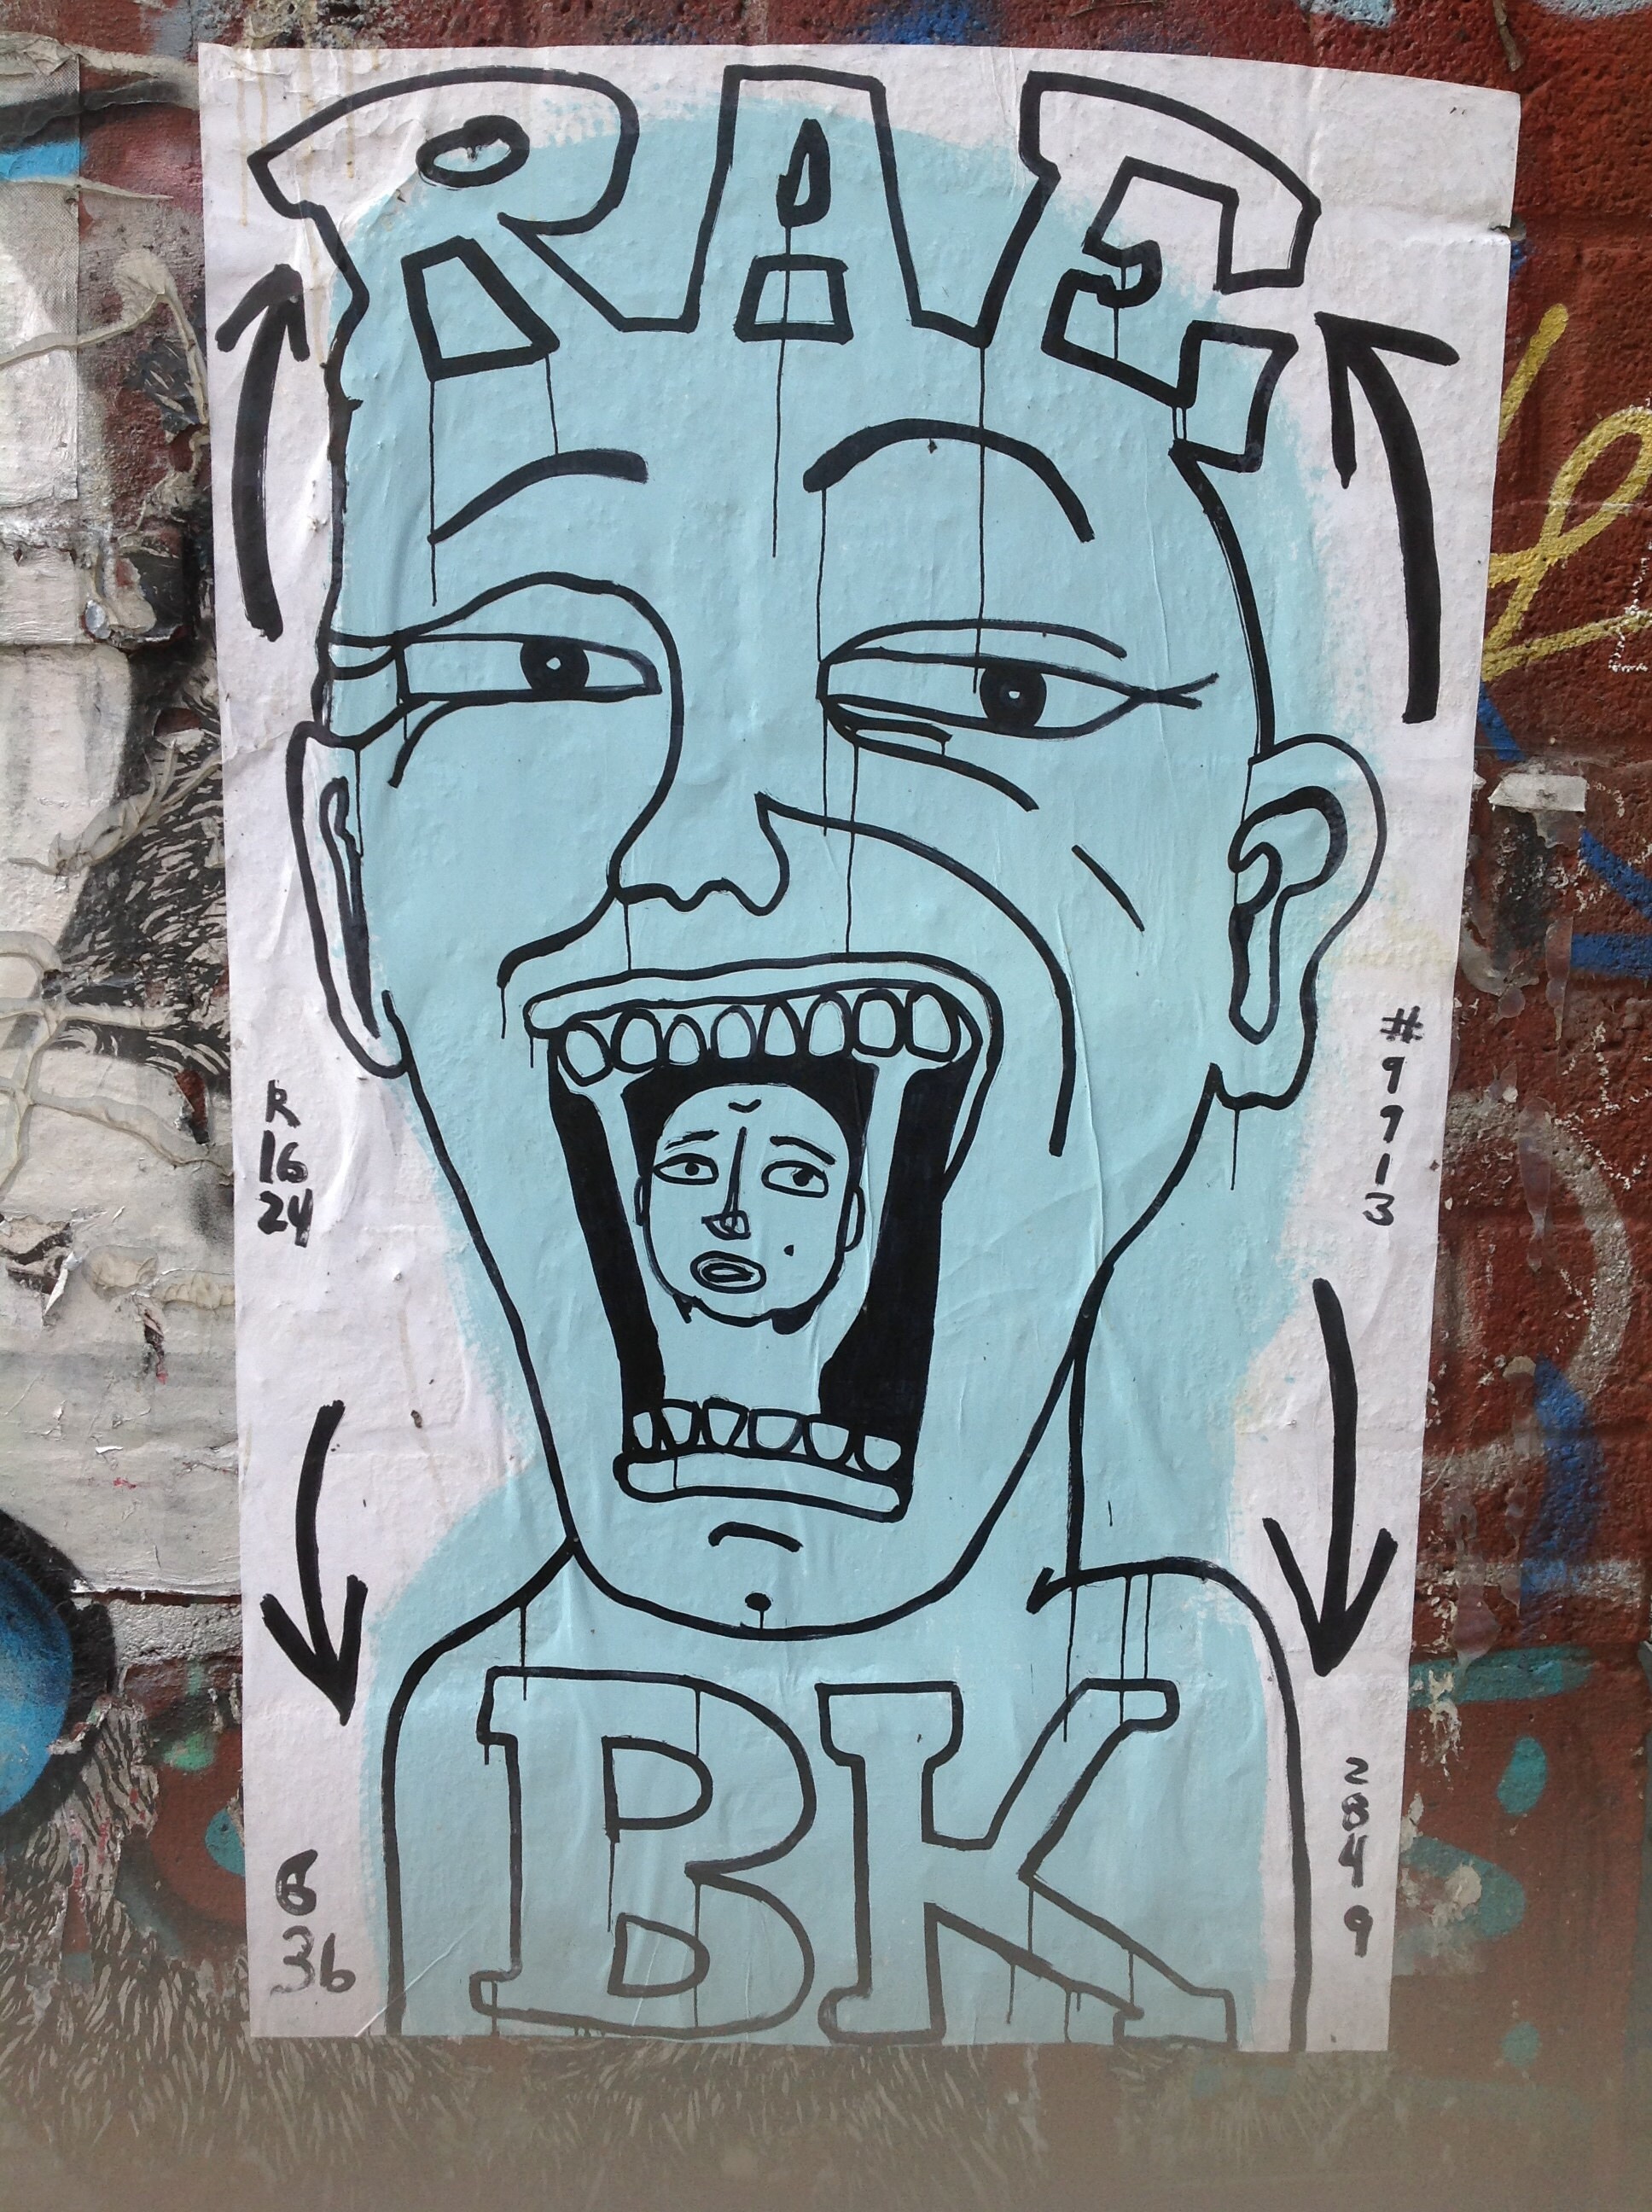 graffiti at brooklyn ny